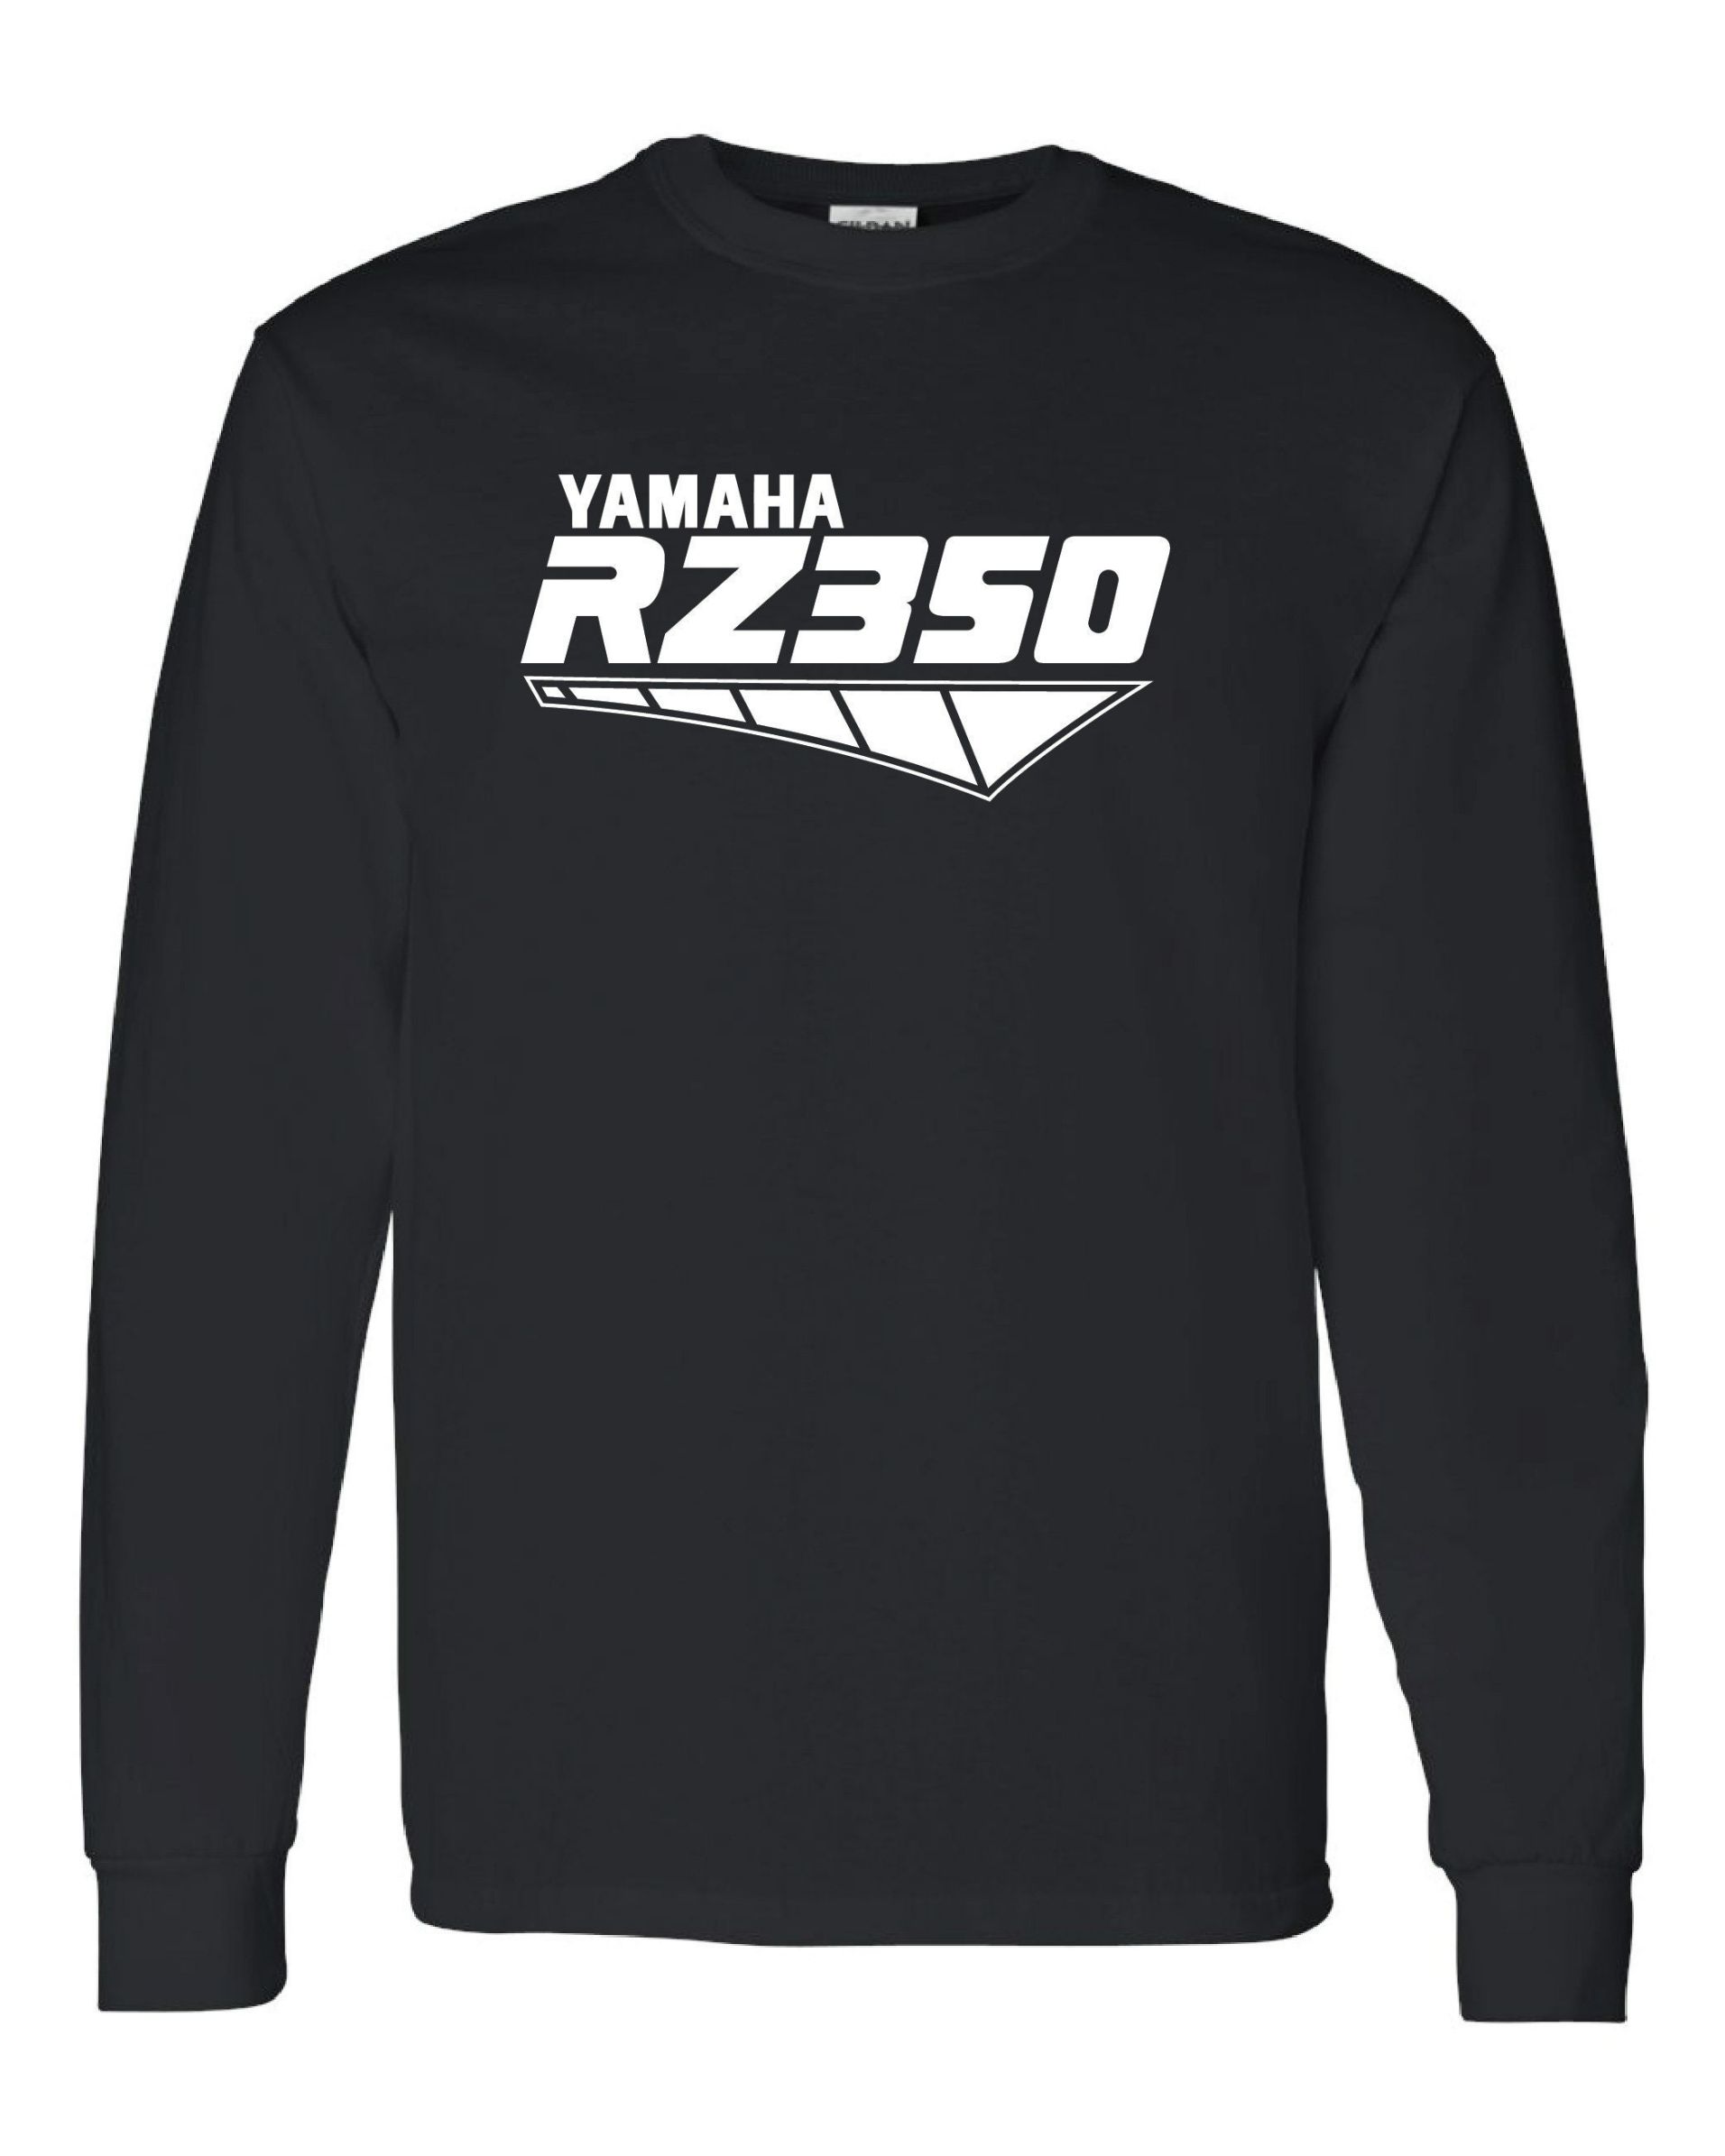 Yamaha RZ350 RZ 350 Old School Retro Two Stroke Cafe Logo Decal Long Sleeve Sweatshirt